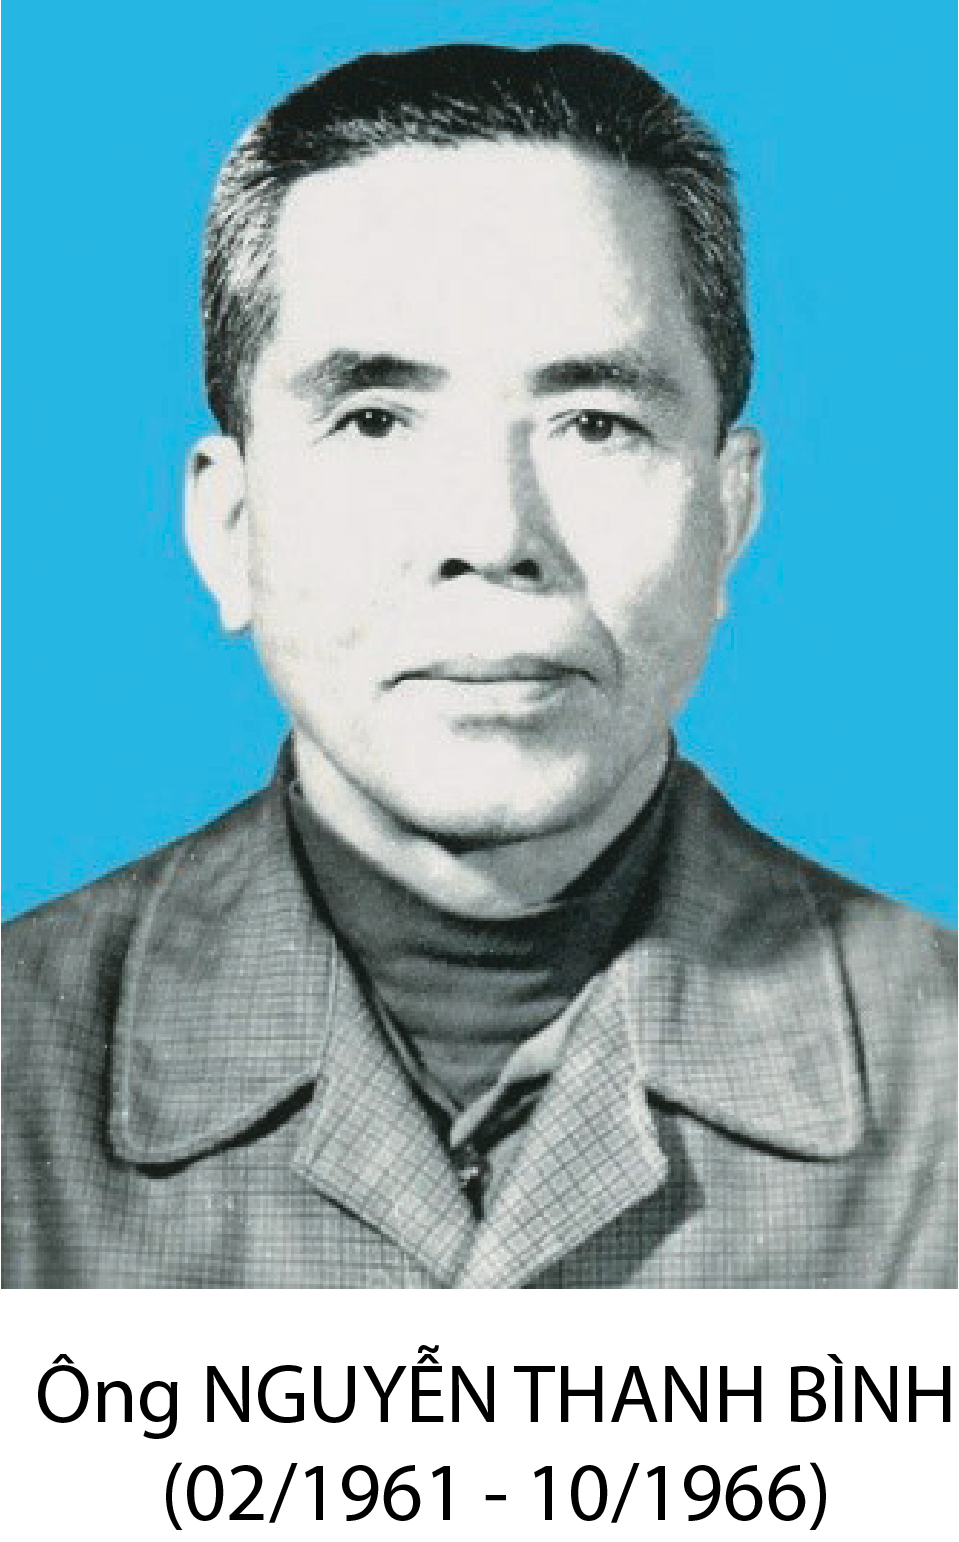 BT Nguyen Thanh Binh